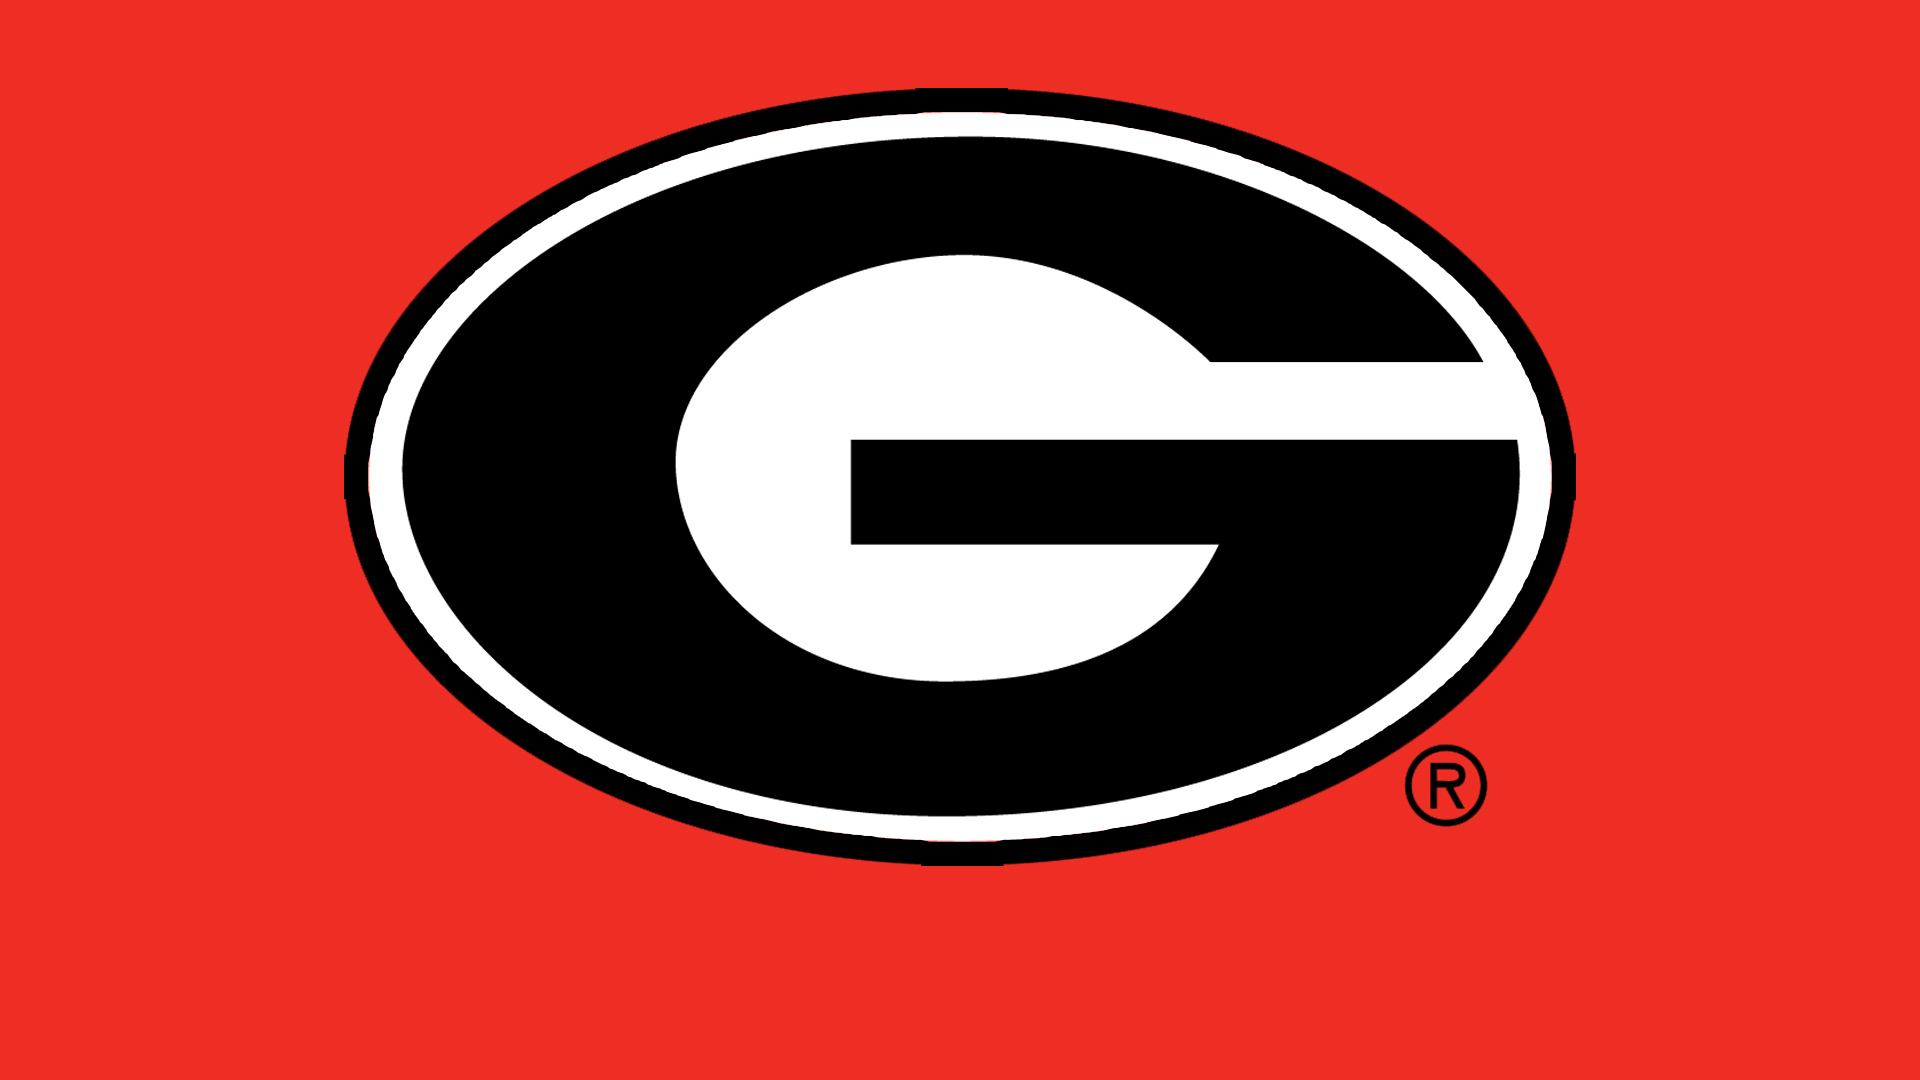 Georgia Bulldogs championship football team declines invitation to